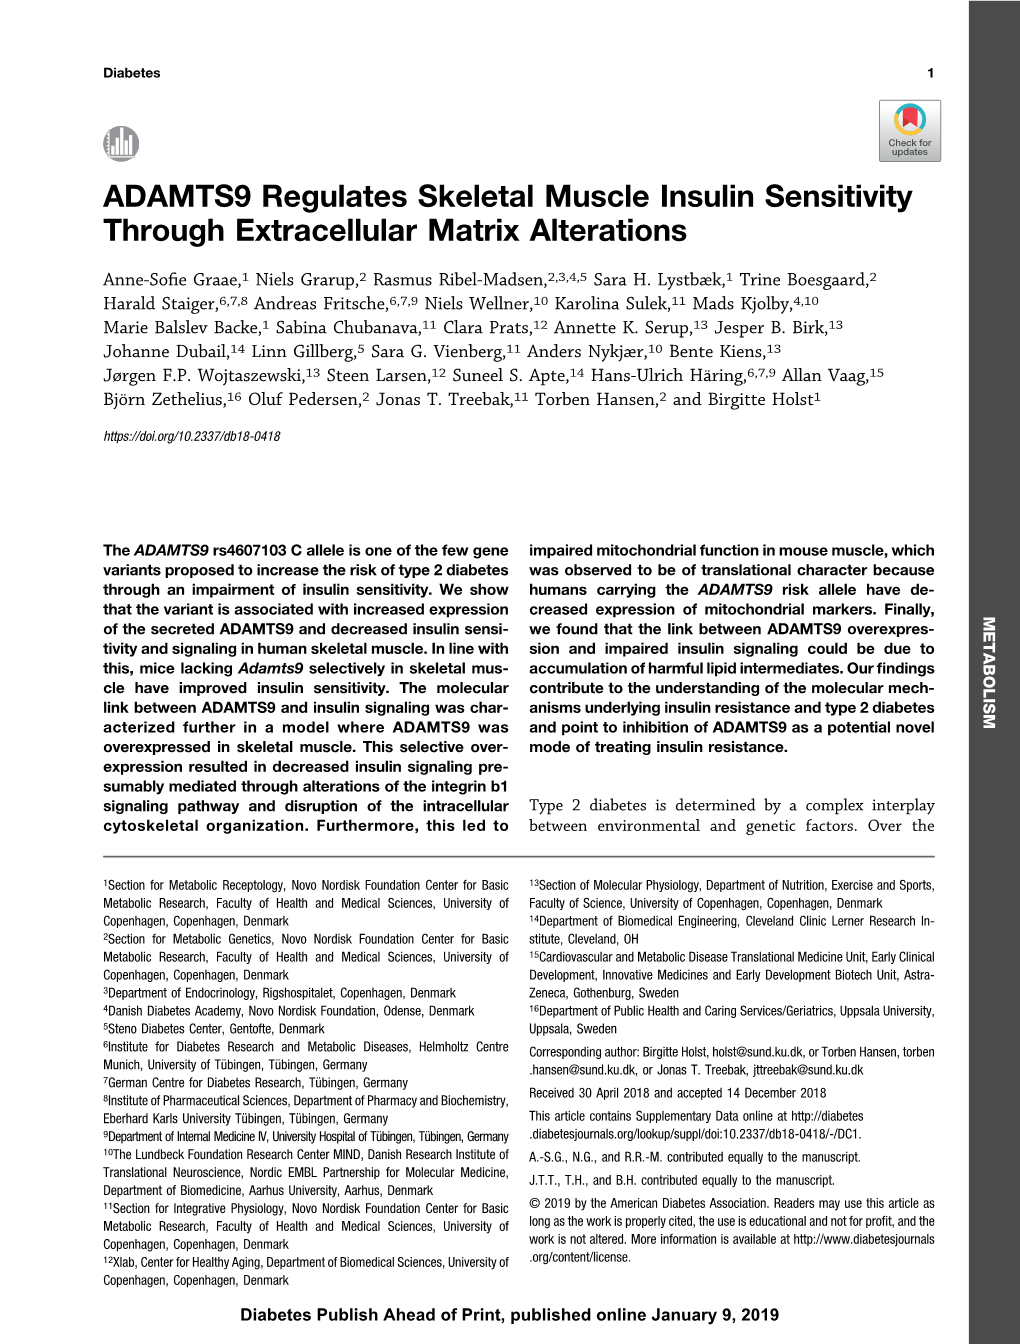 ADAMTS9 Regulates Skeletal Muscle Insulin Sensitivity Through Extracellular Matrix Alterations